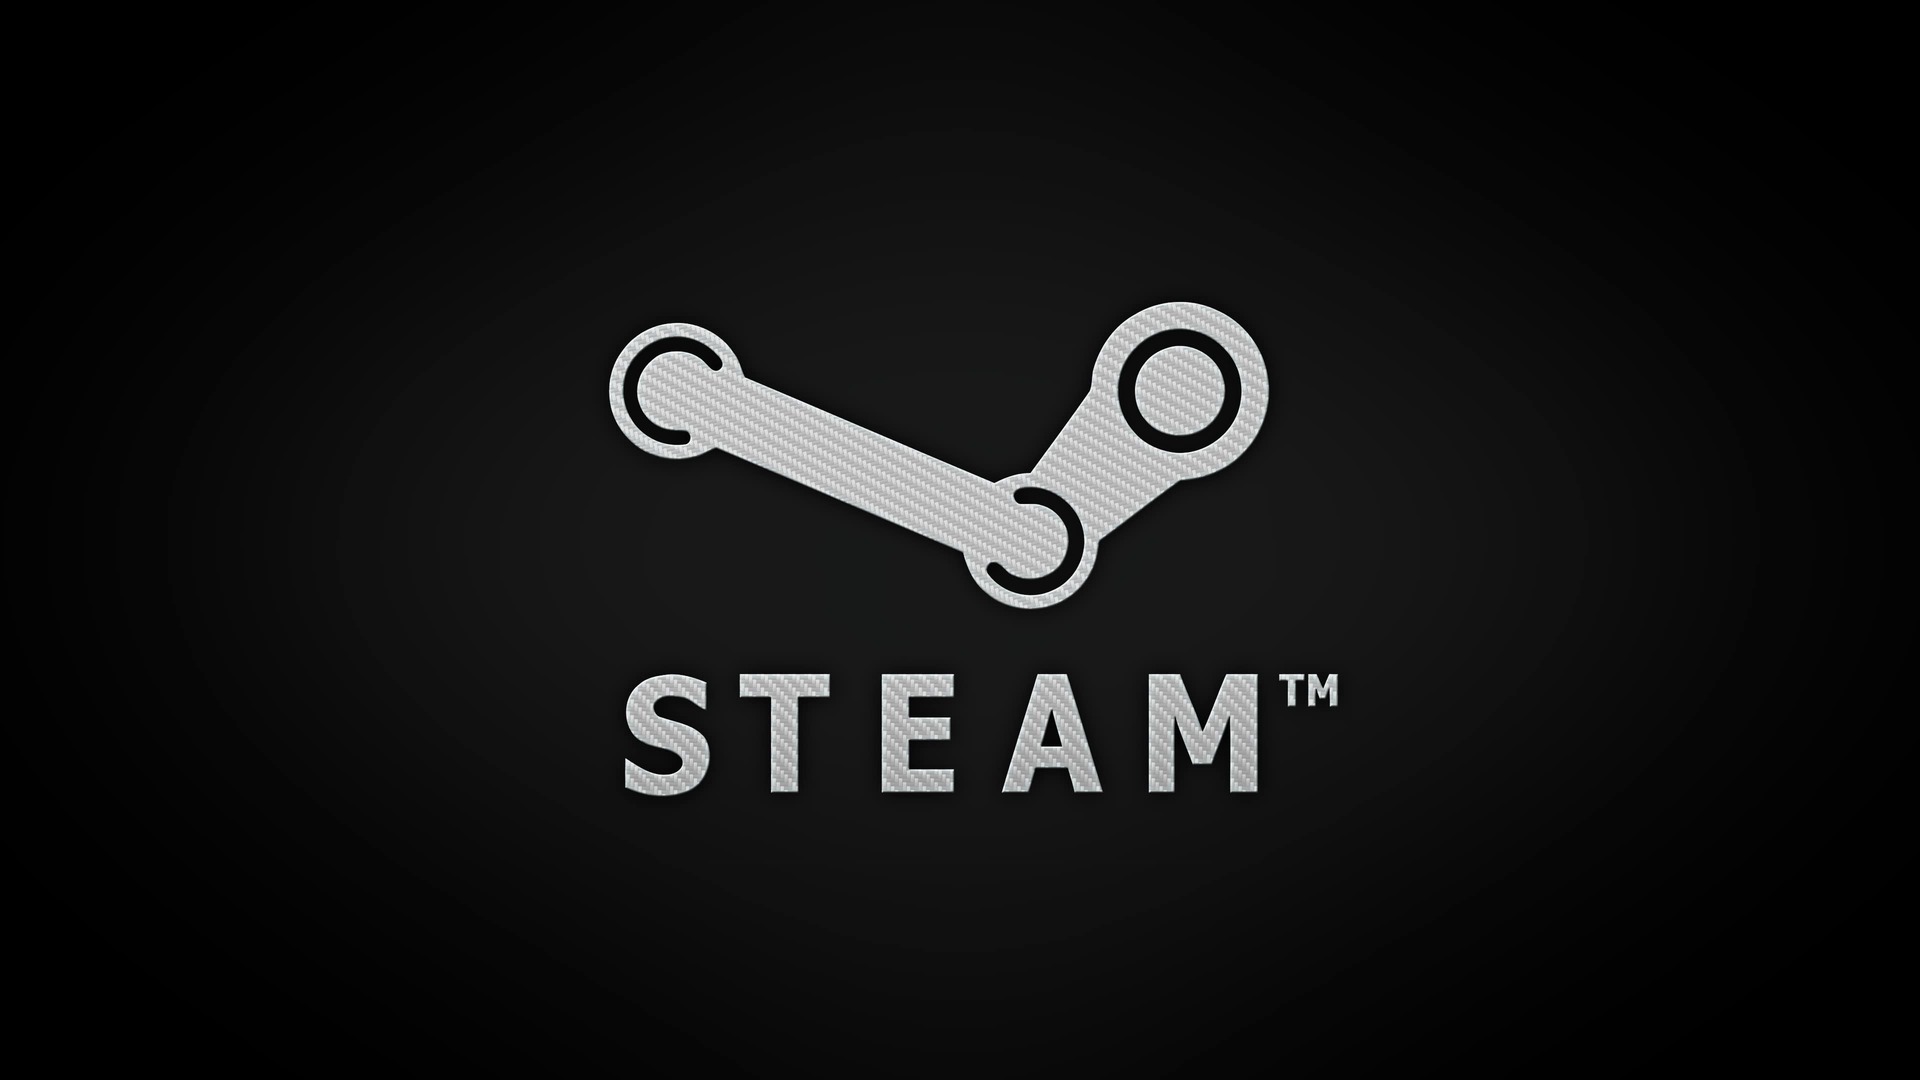 Steam-ում փոփոխվել է վաղ հասանելիության խաղերի վերադարձի կարգը